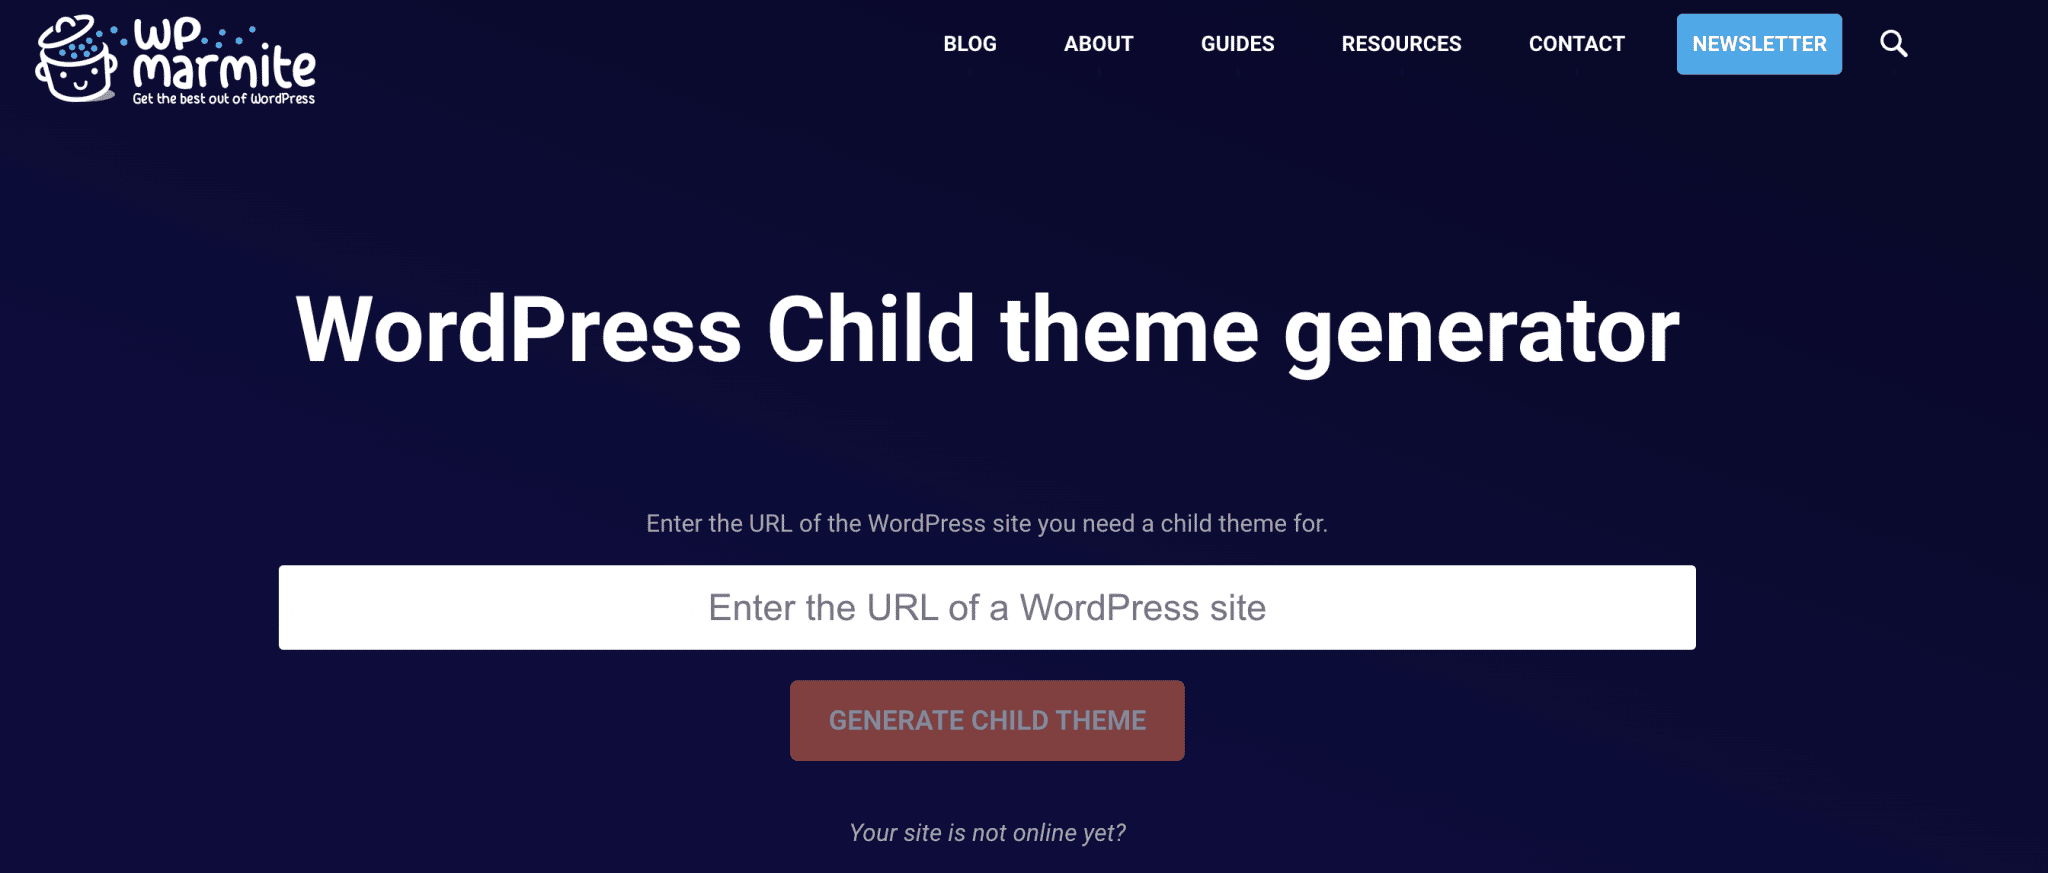 WPMarmite's child theme generator allows you to create a WordPress child theme quickly.